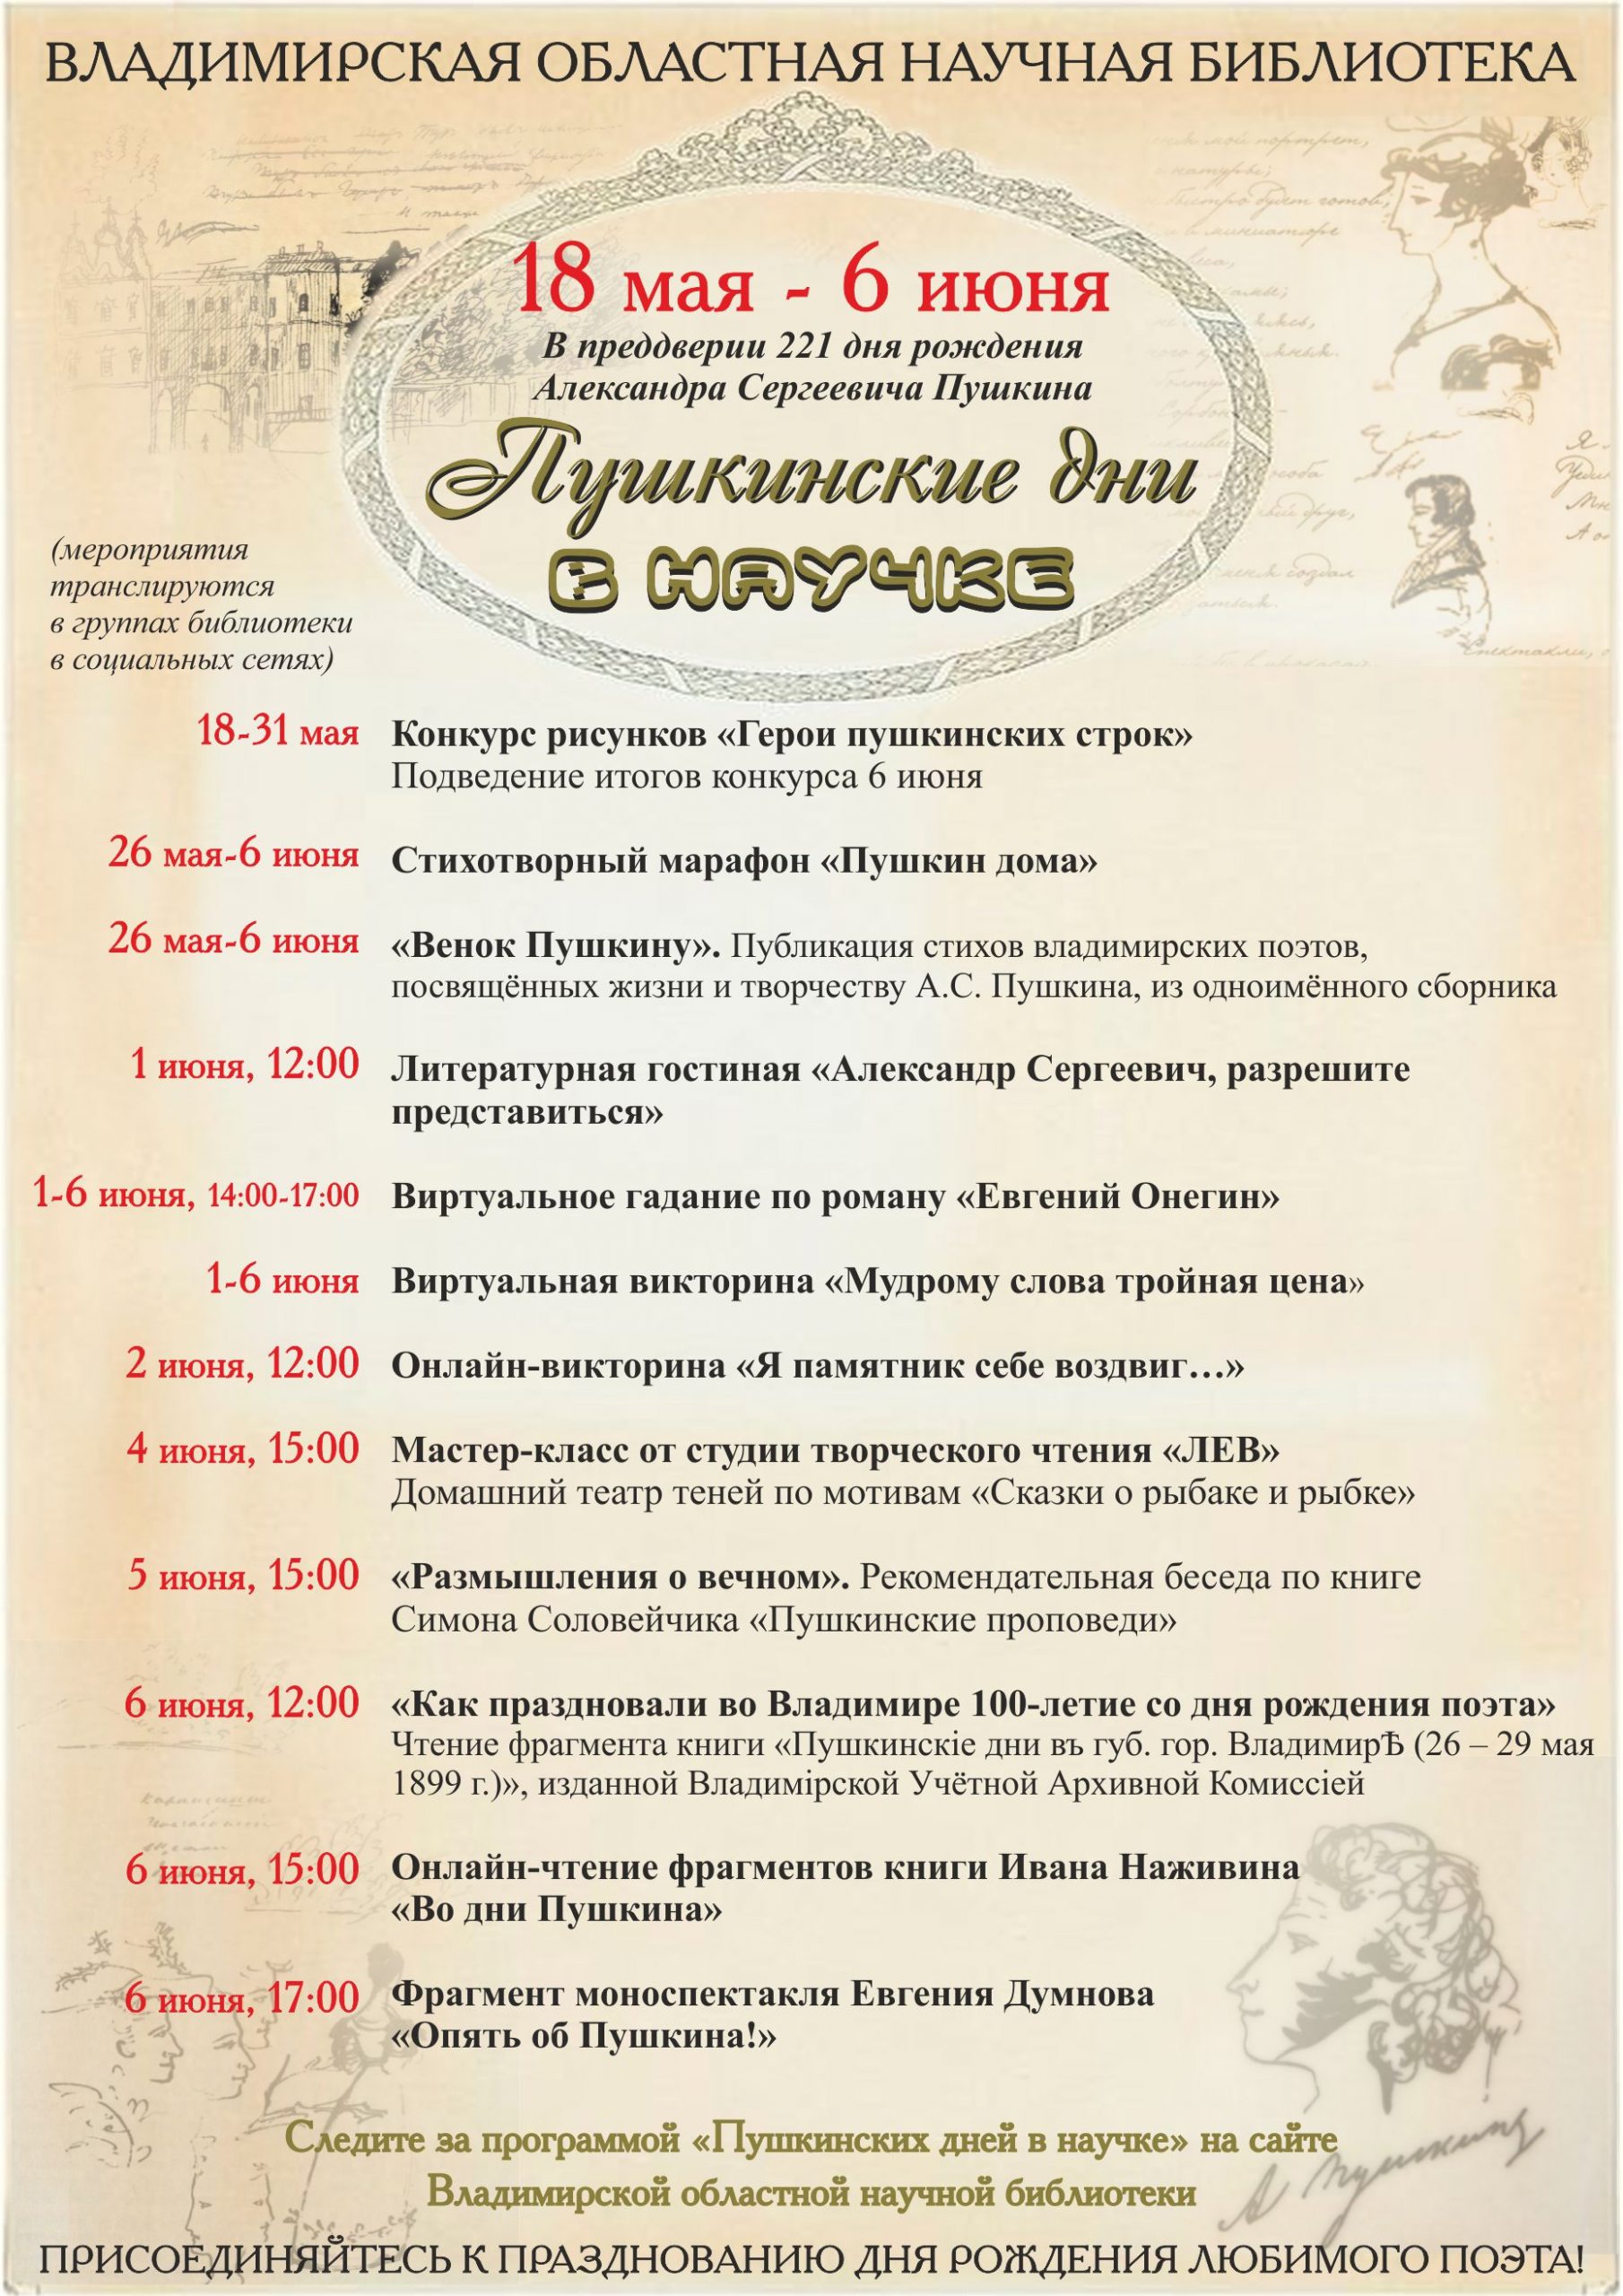 Программа "Пушкинских дней в научке"